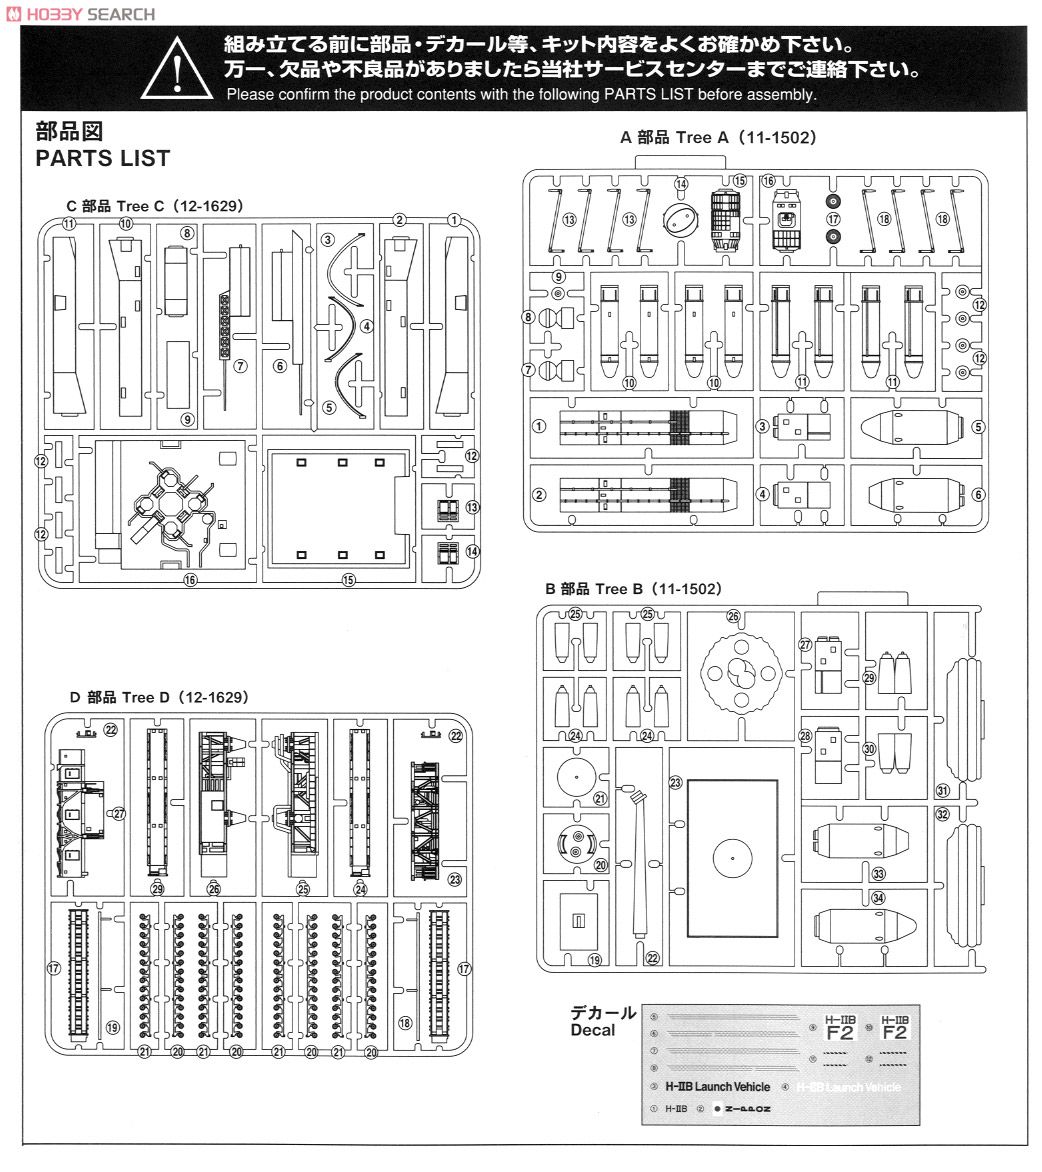 H-IIBロケット & 移動発射台 (プラモデル) 設計図9